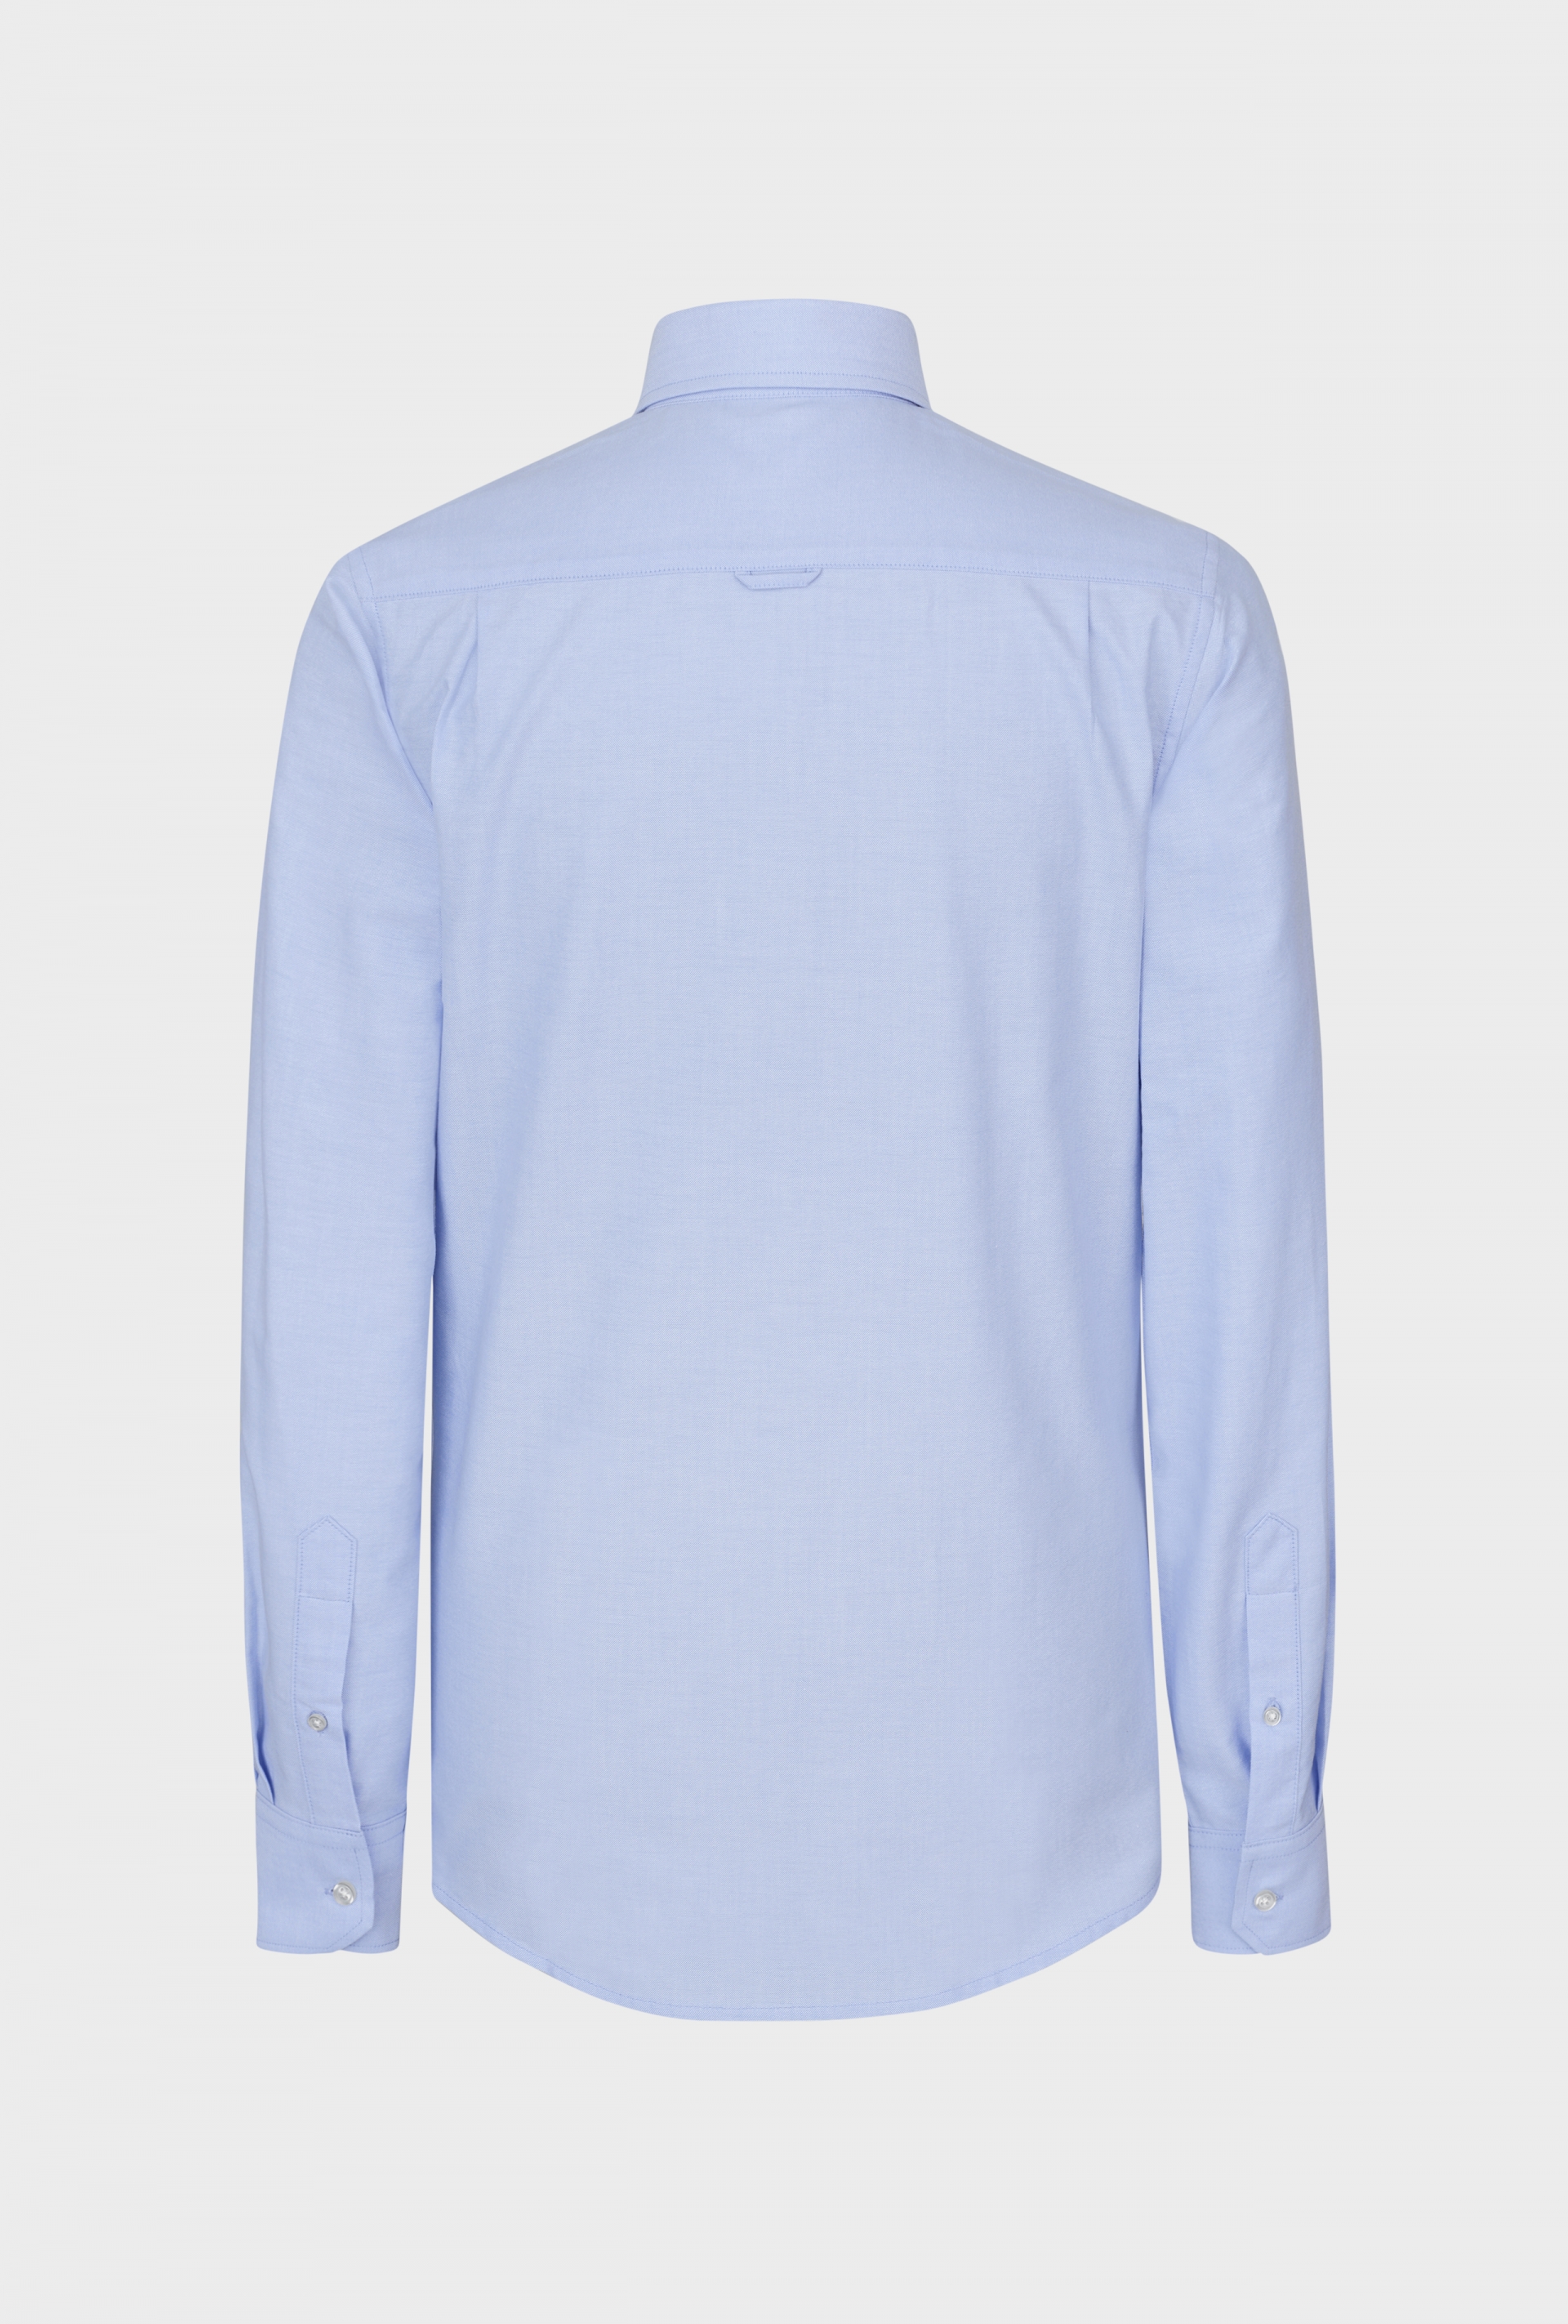 Men’s shirt Max, long sleeve | Ted Bernhardtz – At Work collection shop